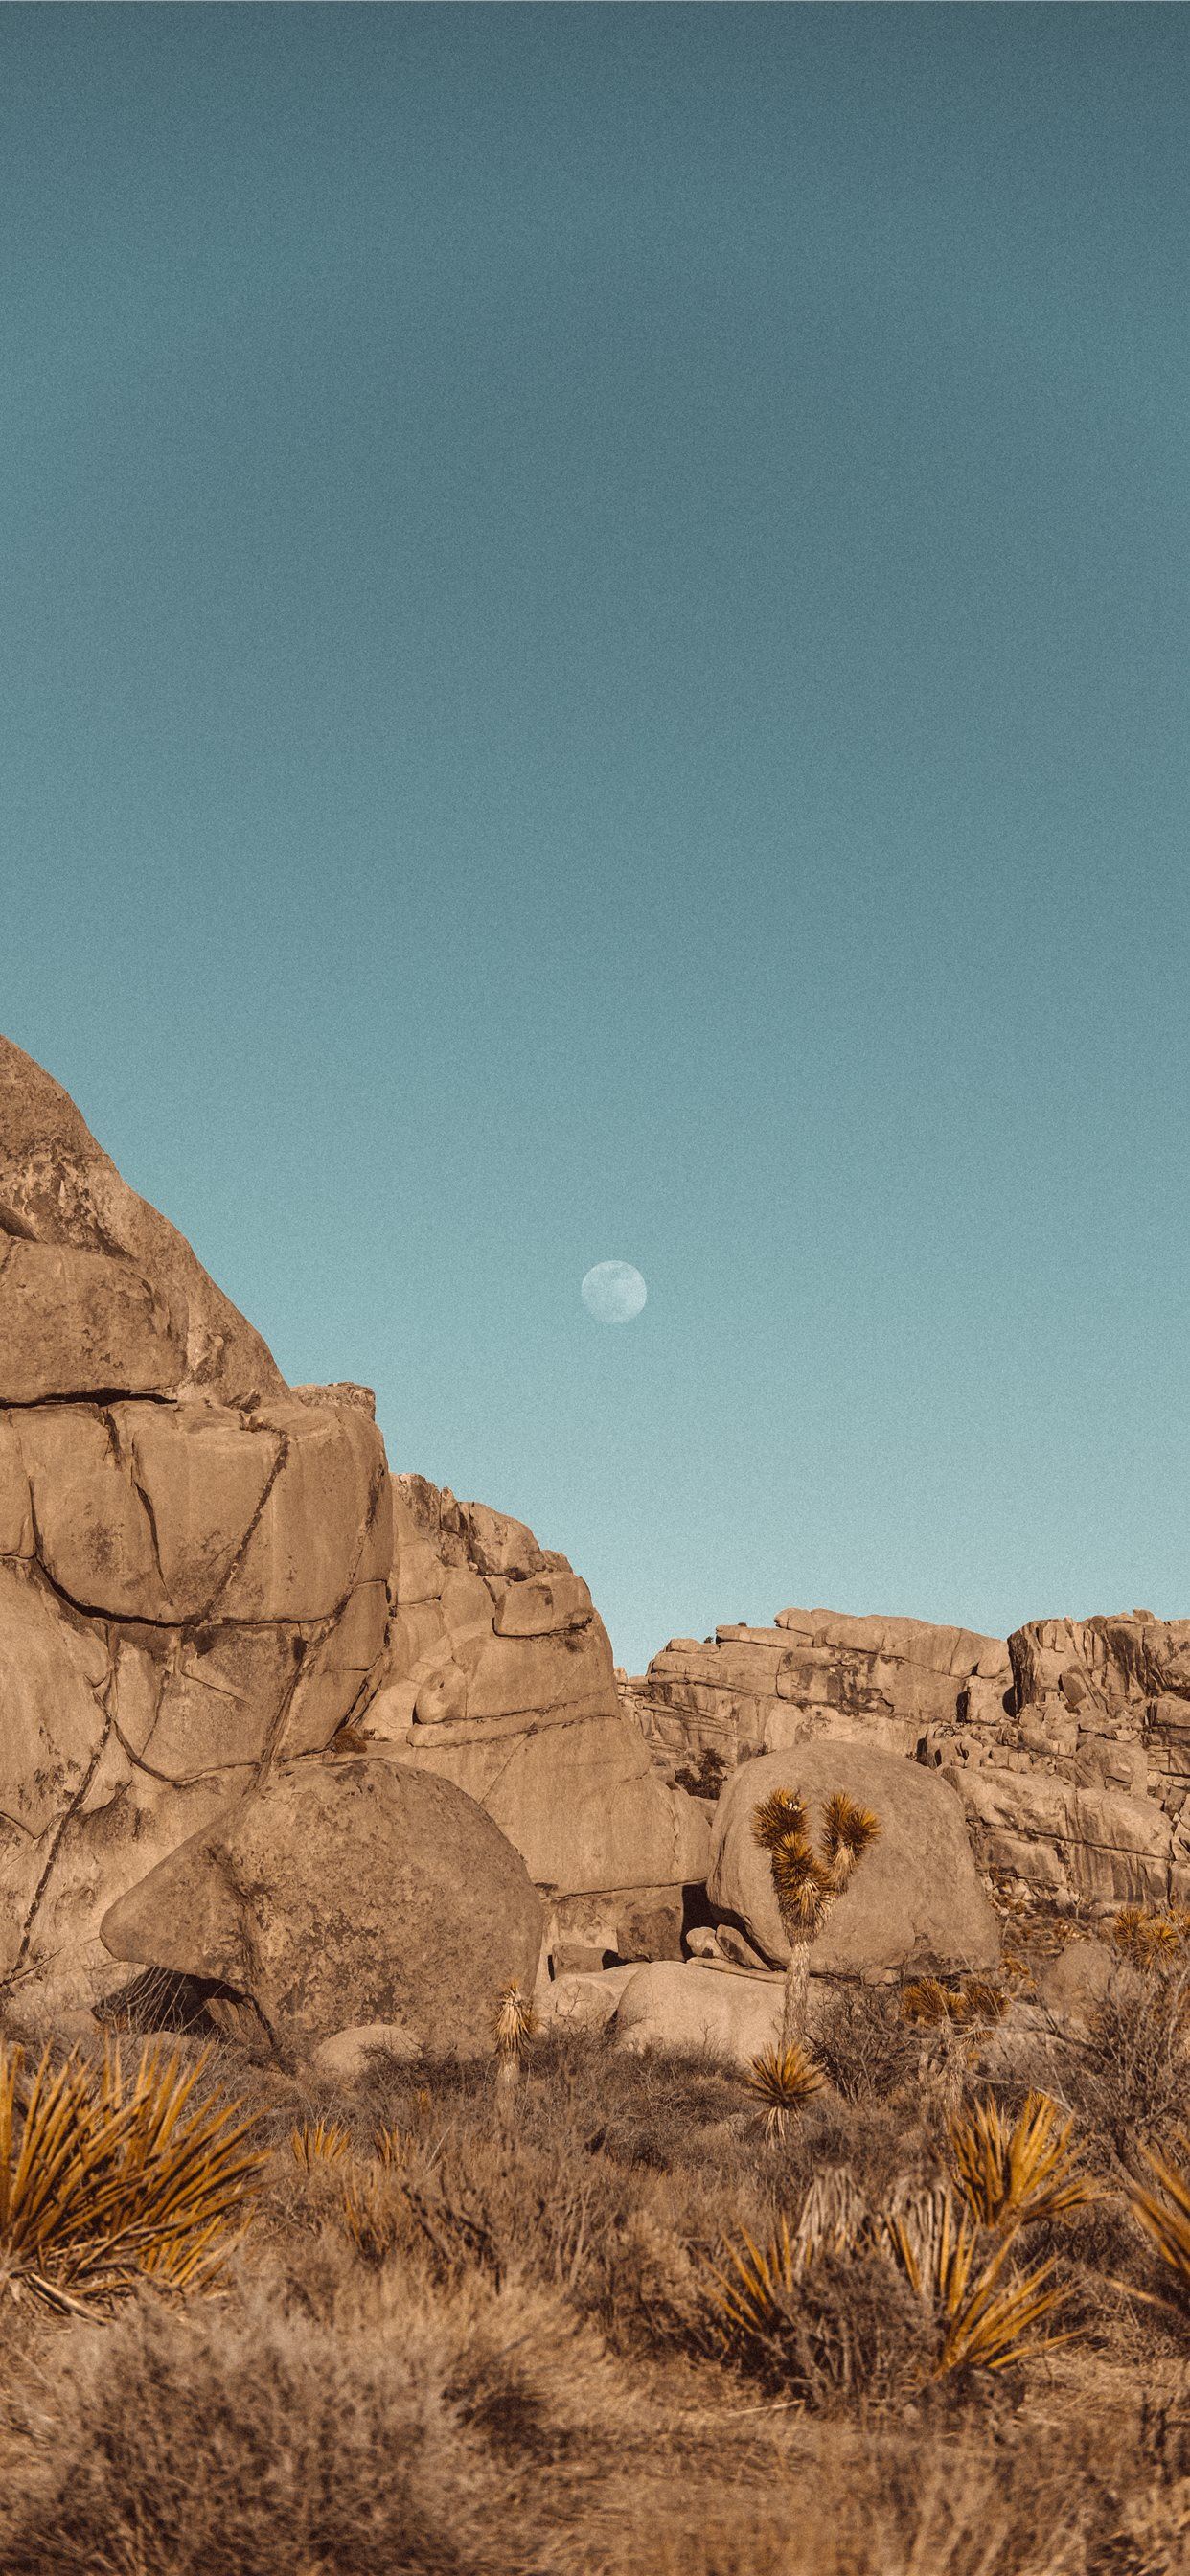 brown rock formation under blue sky during daytime iPhone SE wallpaper 